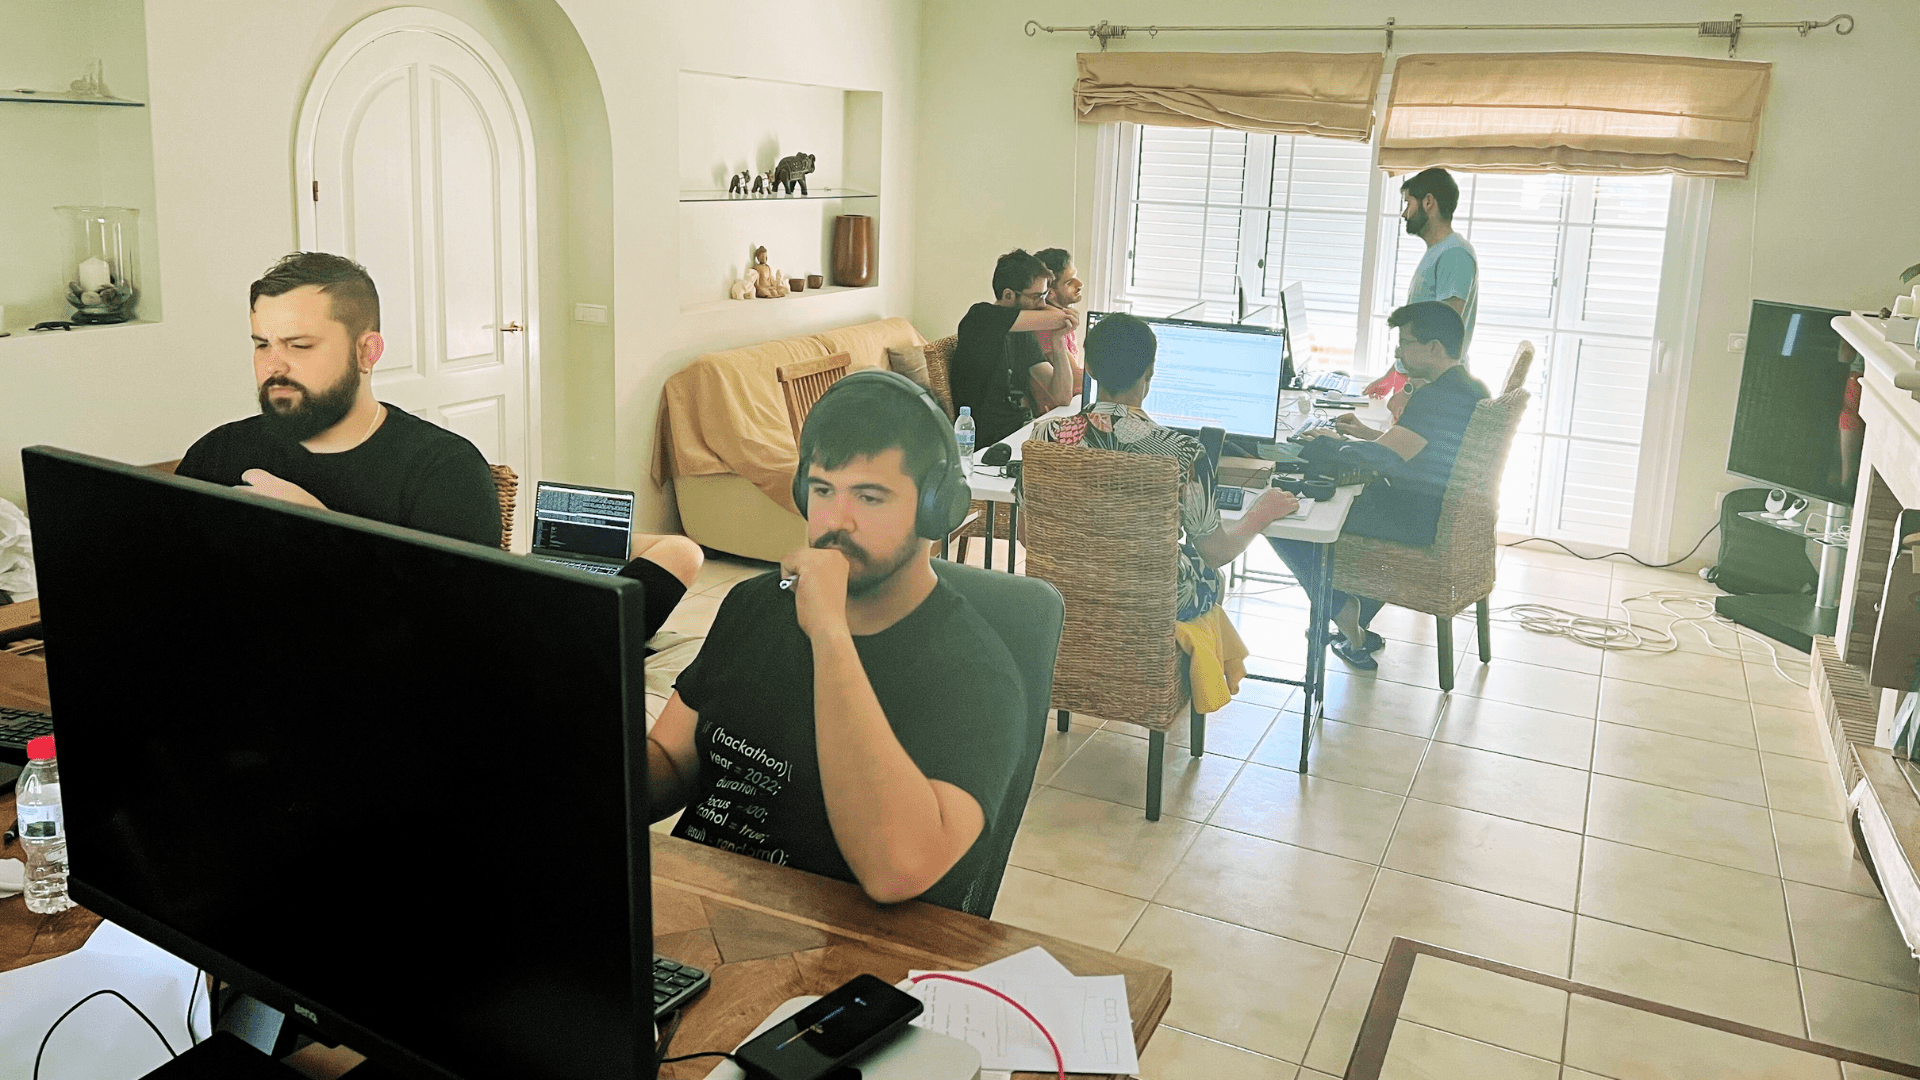 The NPAW team during the hackathon